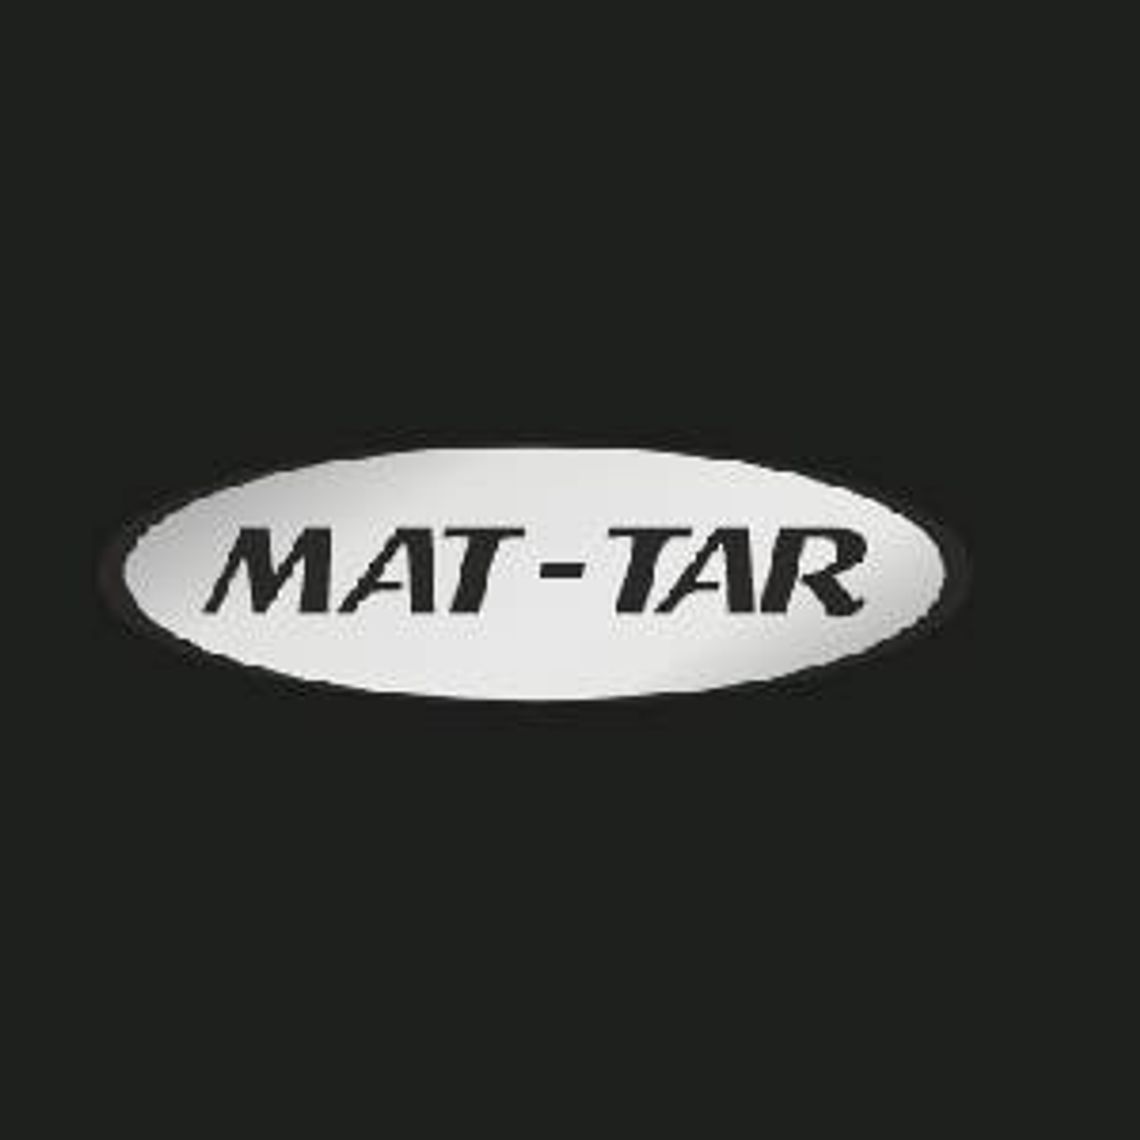 Podłogi angielskie producent - Mat-tar